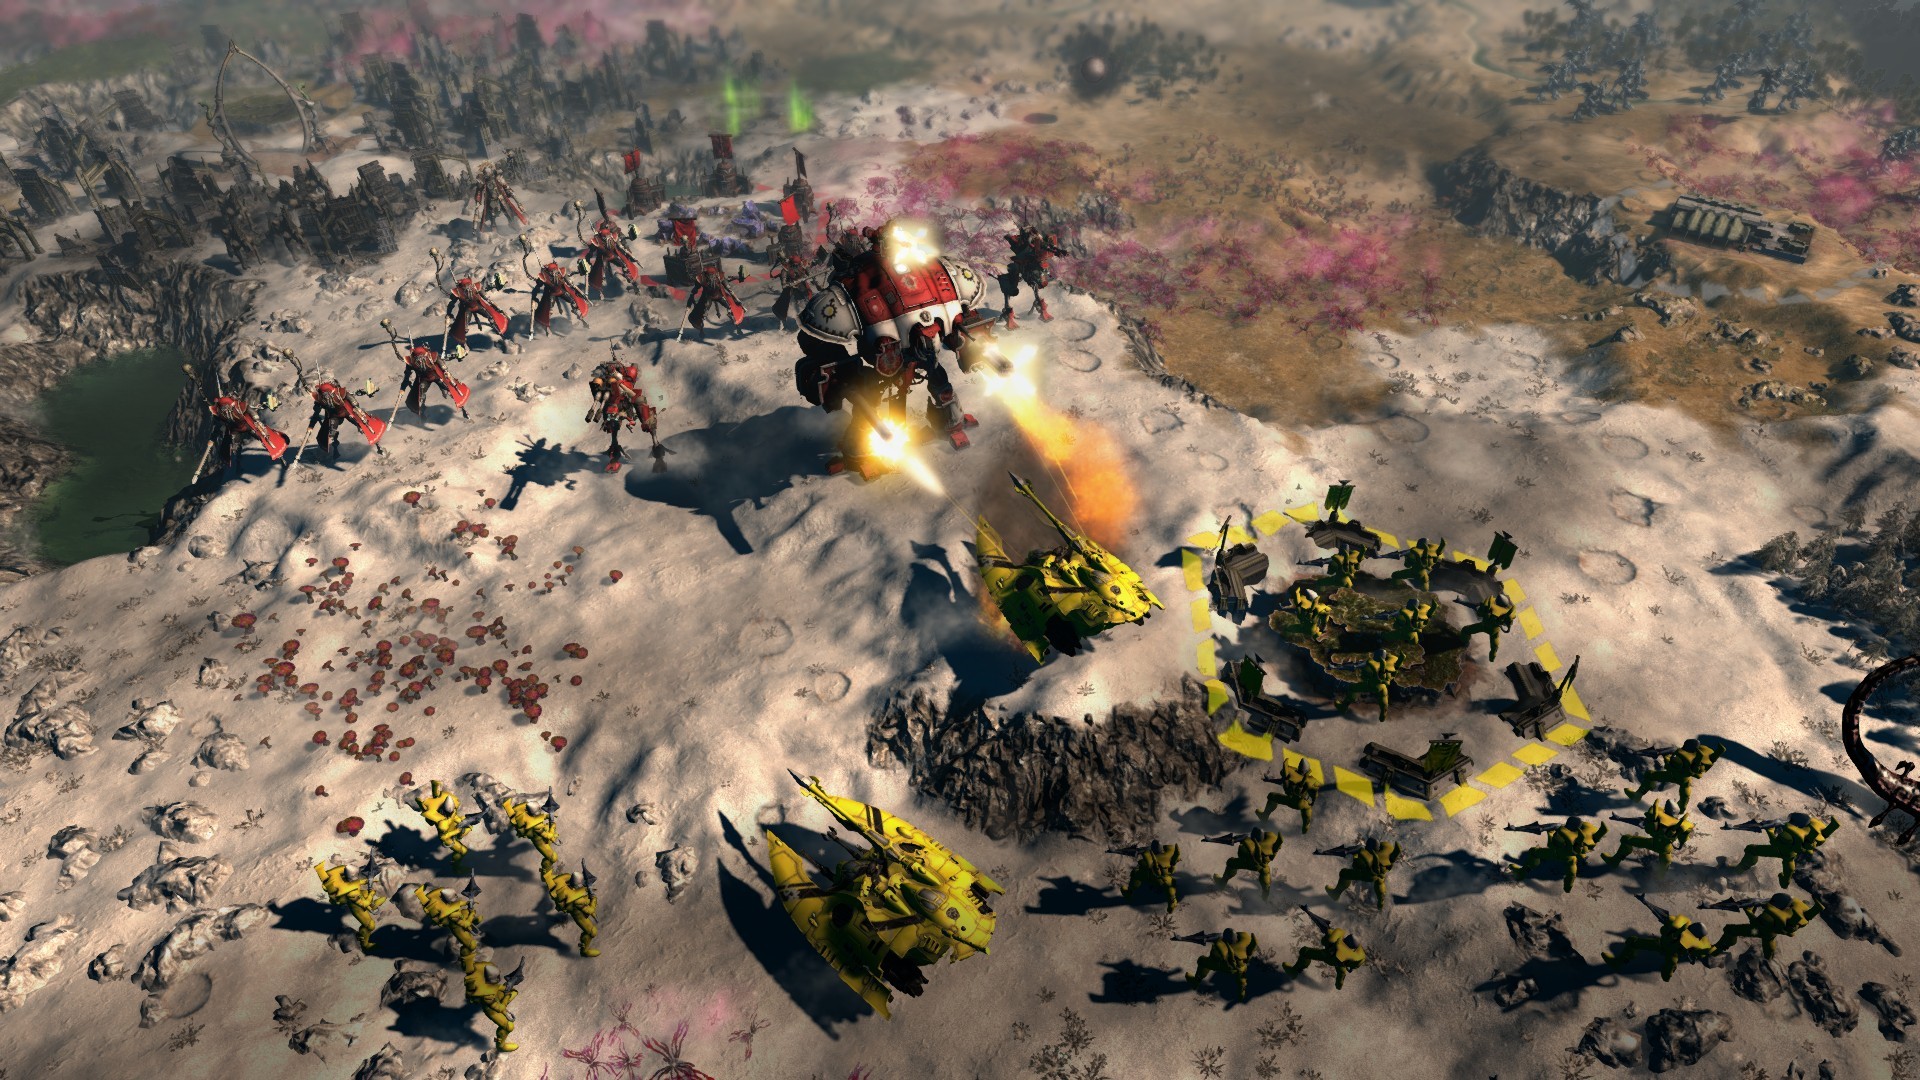 Civilization-style Warhammer 40K game Gladius will unleash the Adeptus Mechanicus